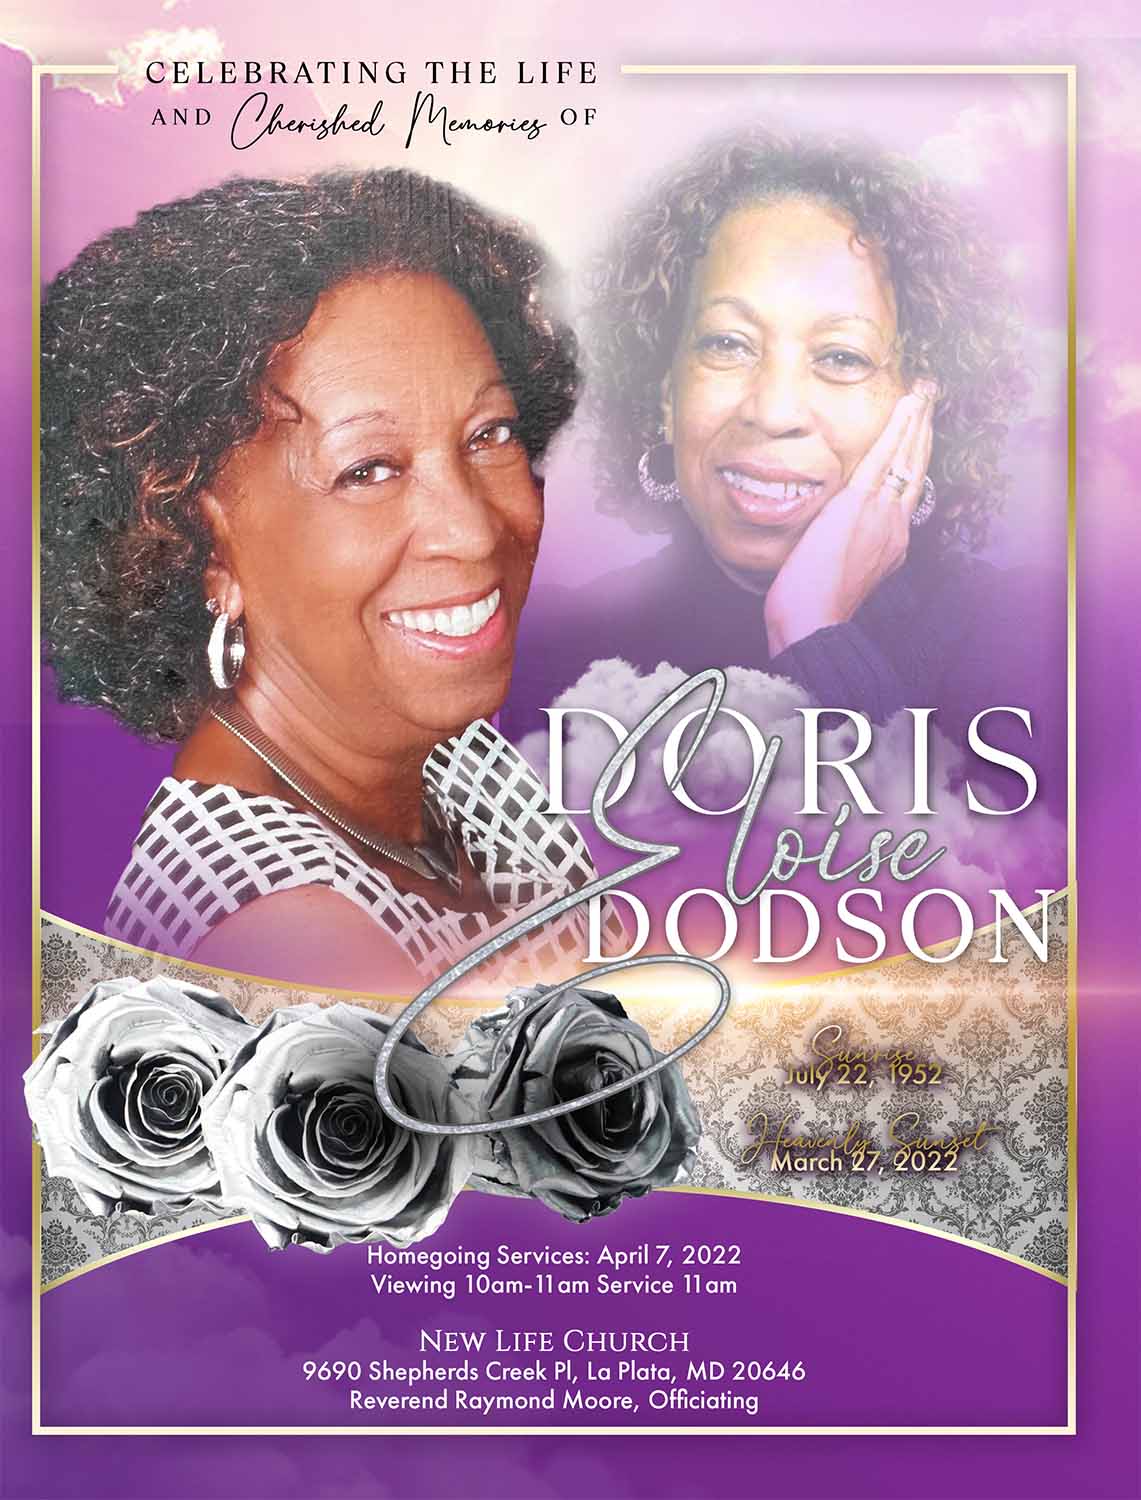 Doris Dodson 1952-2022